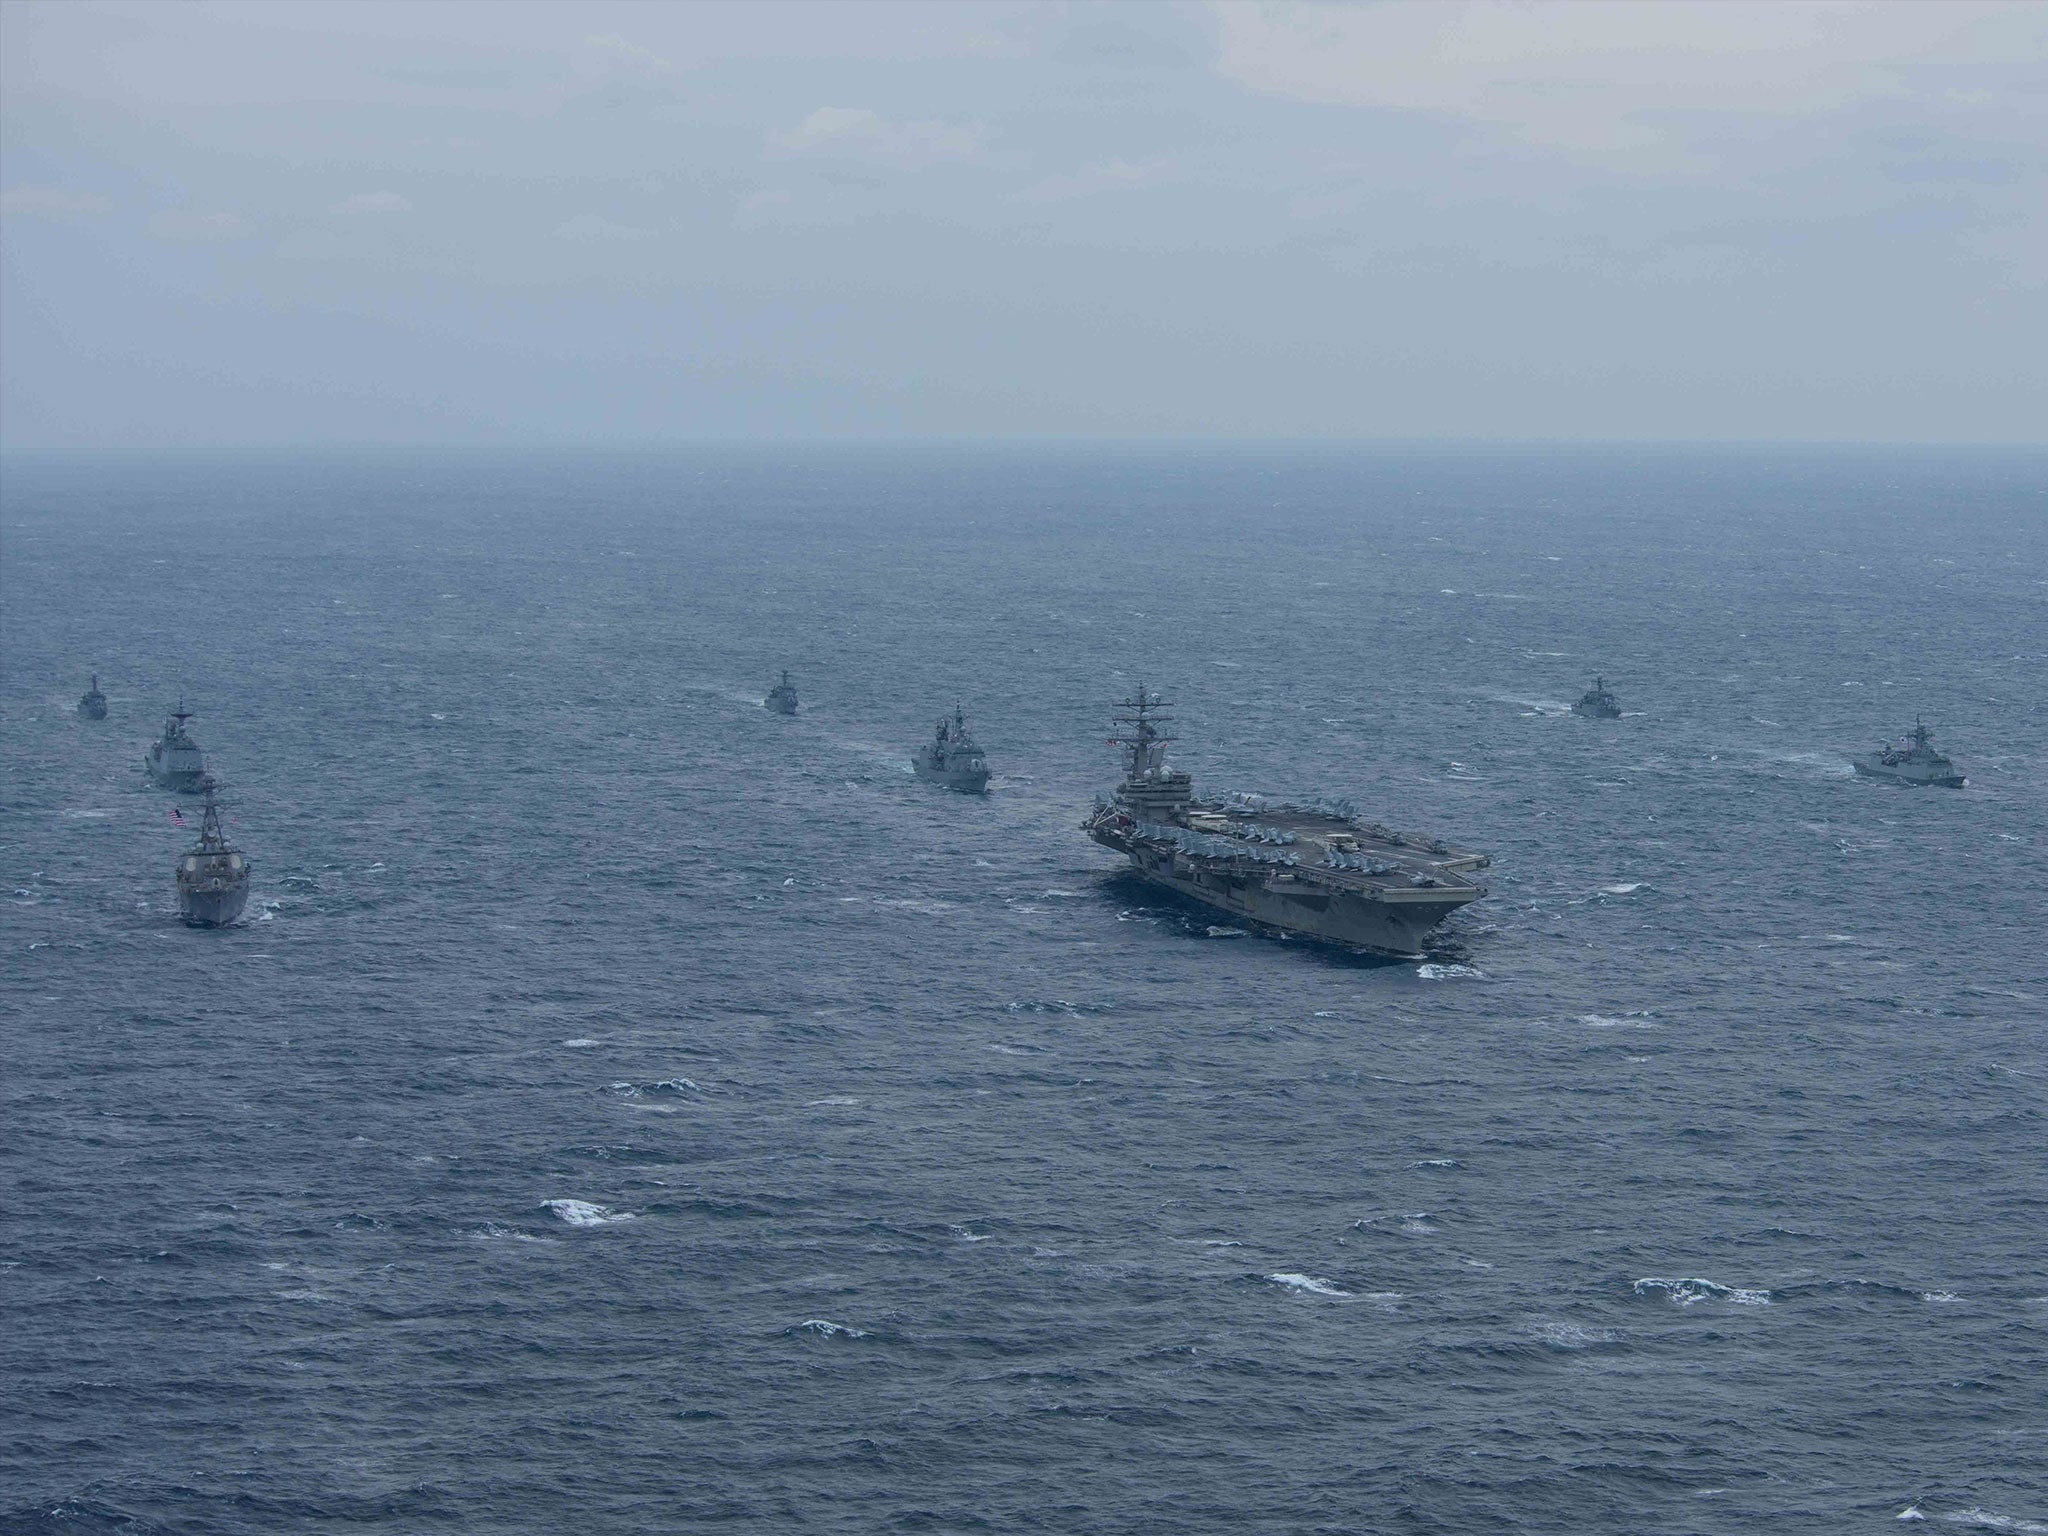 USS Ronald Reagan alongside South Korean ships in waters east of the Korean Peninsula